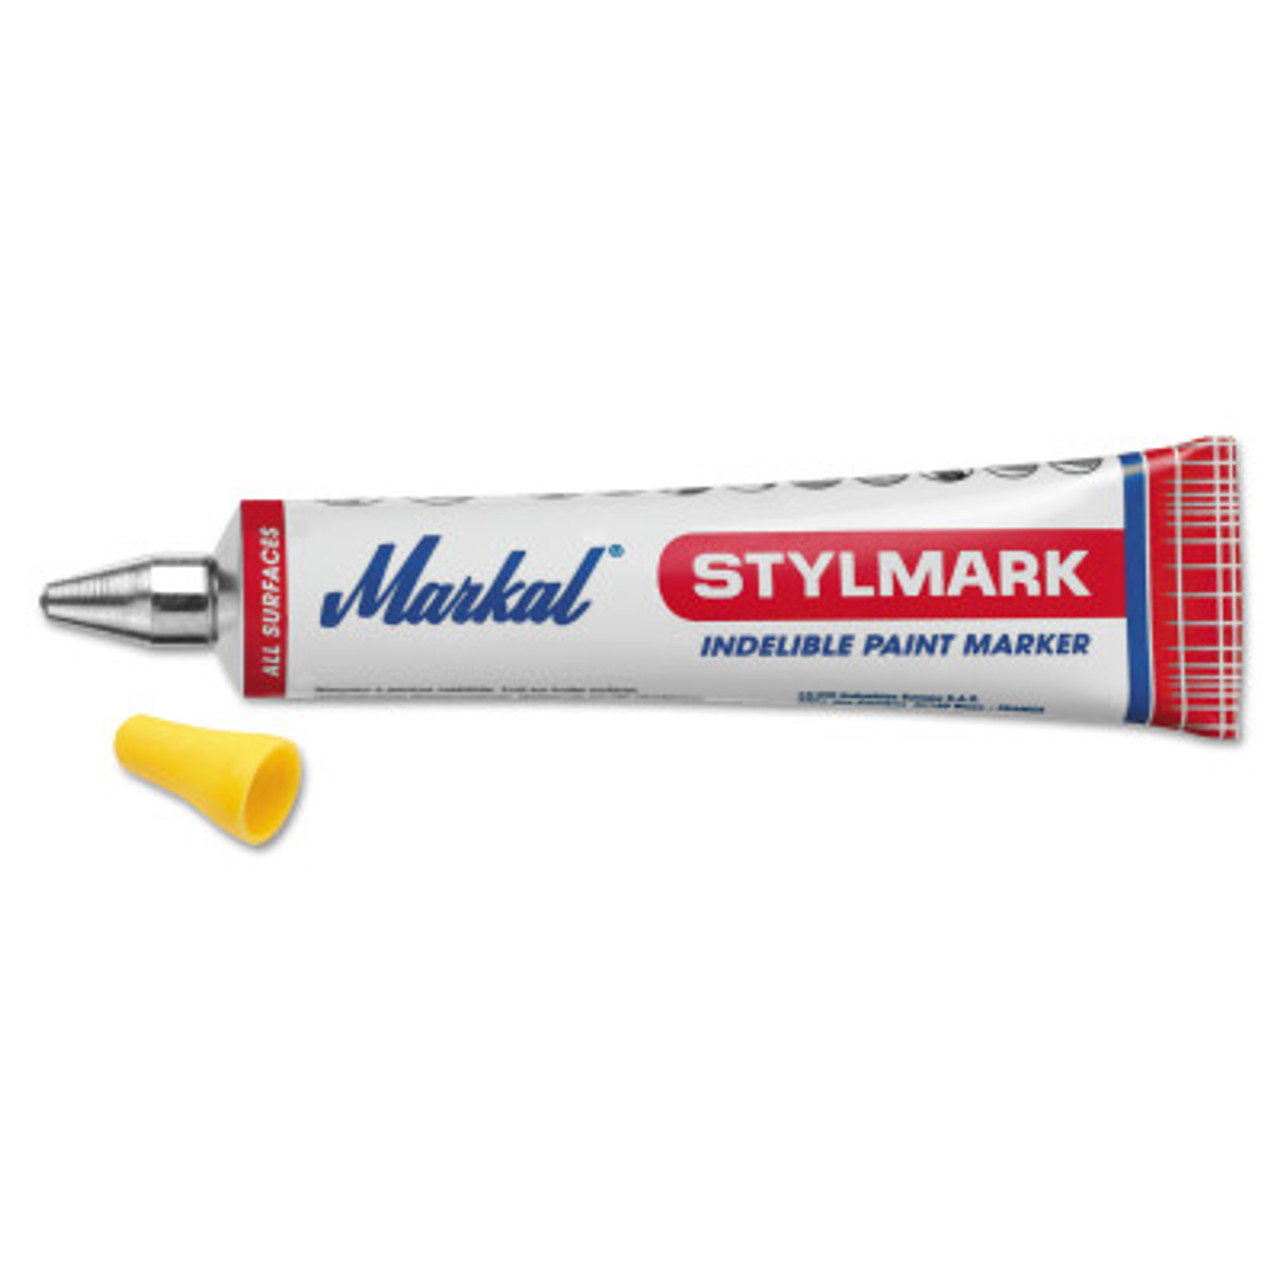 Markal Valve Action Paint Marker, Yellow, 1/8